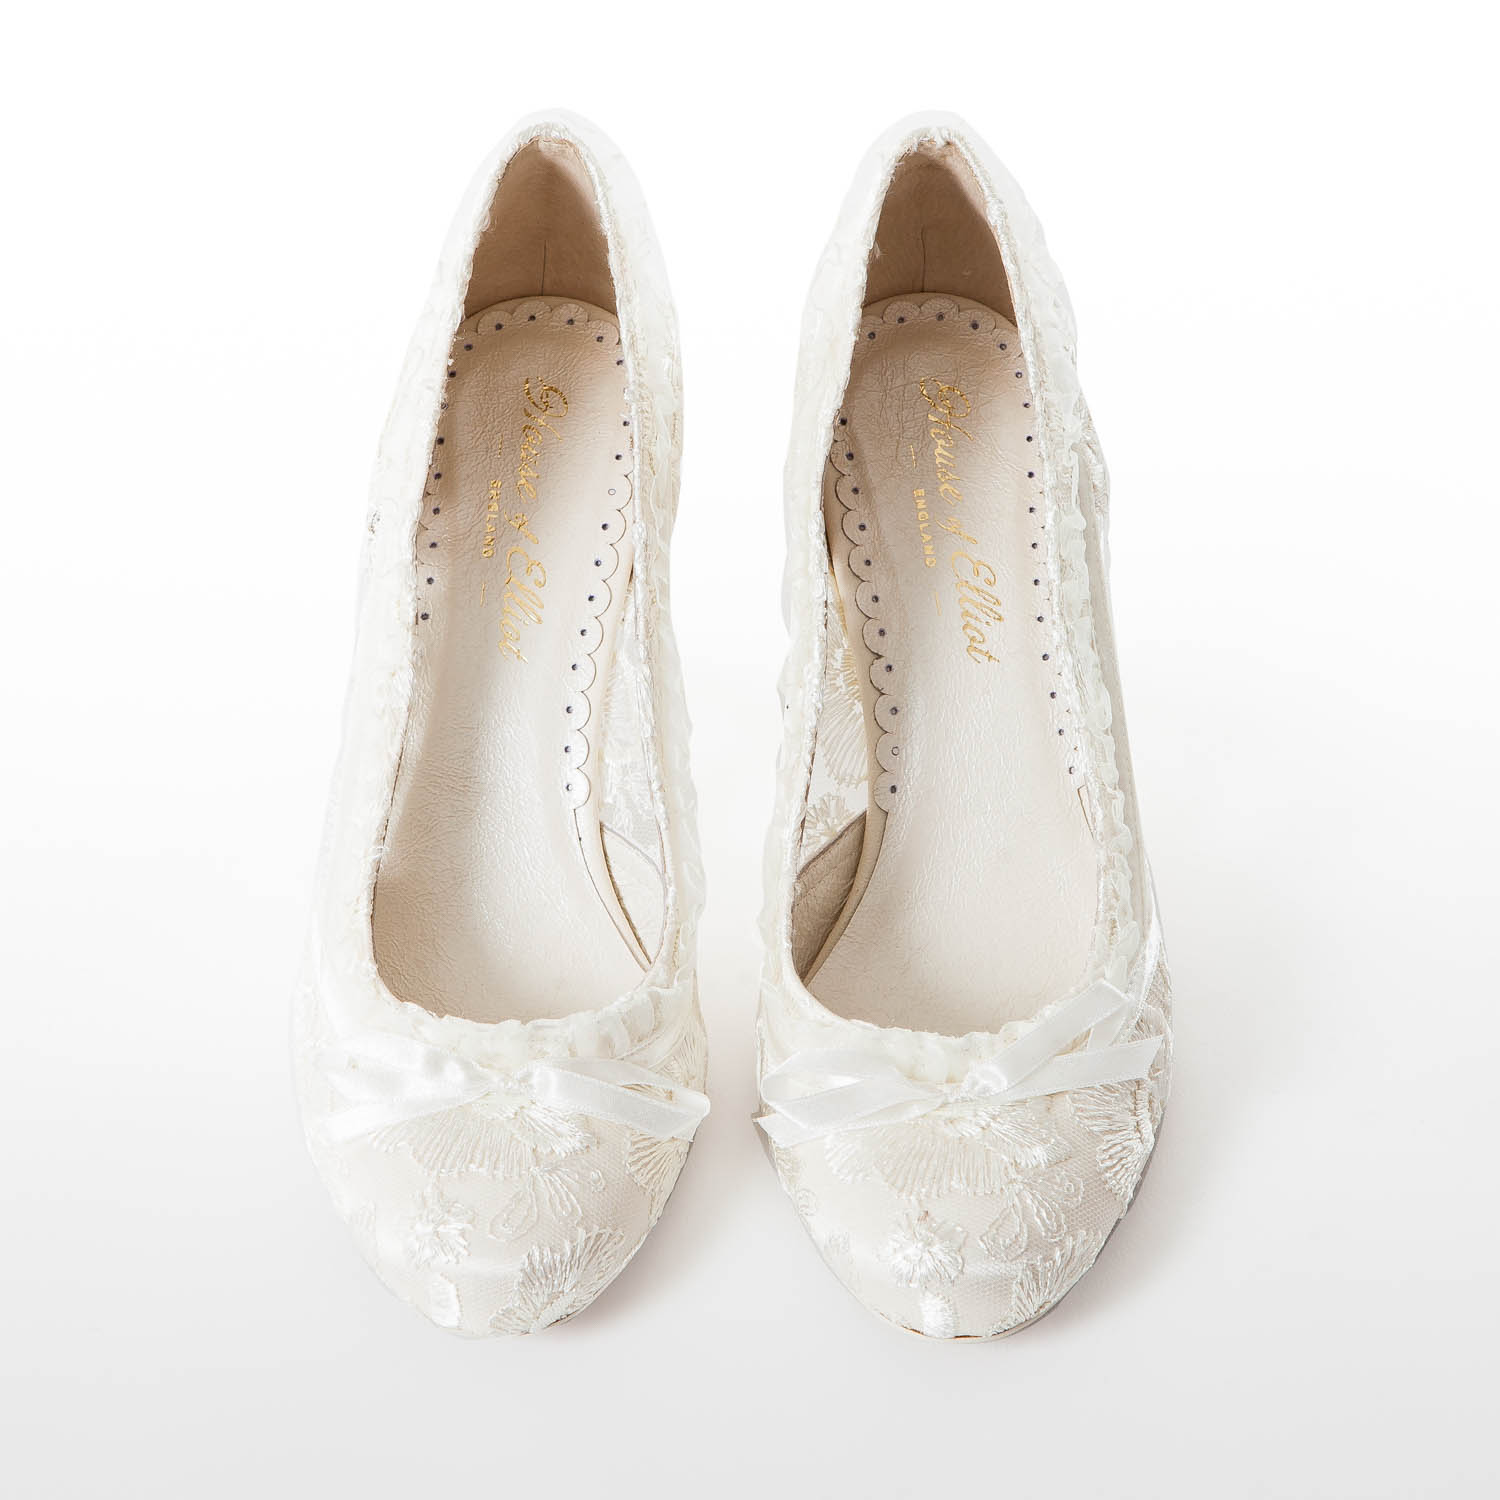 Buy > ivory shoes low heel > in stock